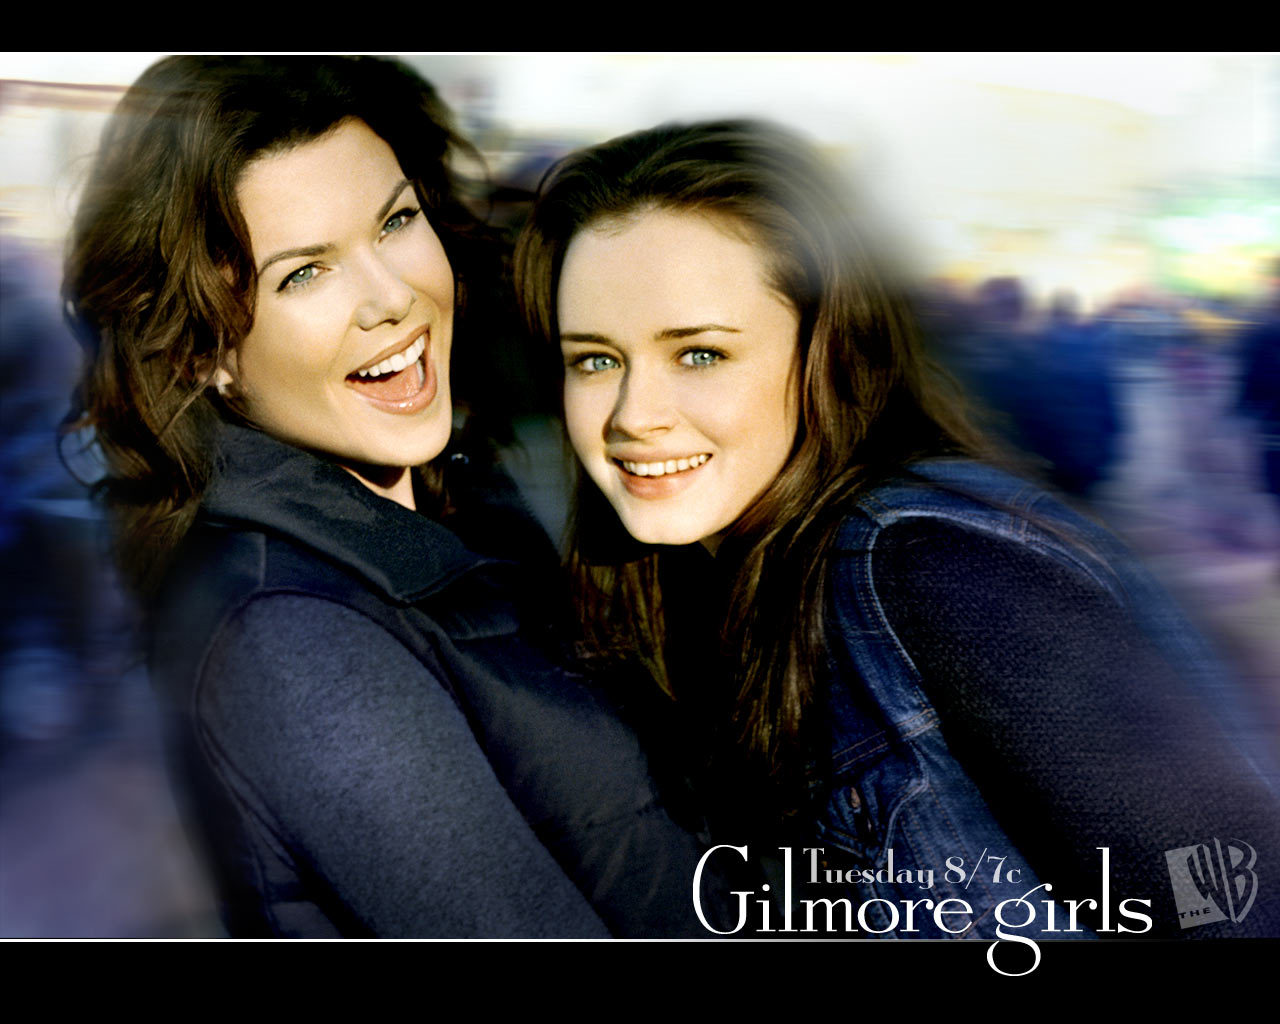 Gilmore-Girls-gilmore-girls-951595_1280_1024.jpg